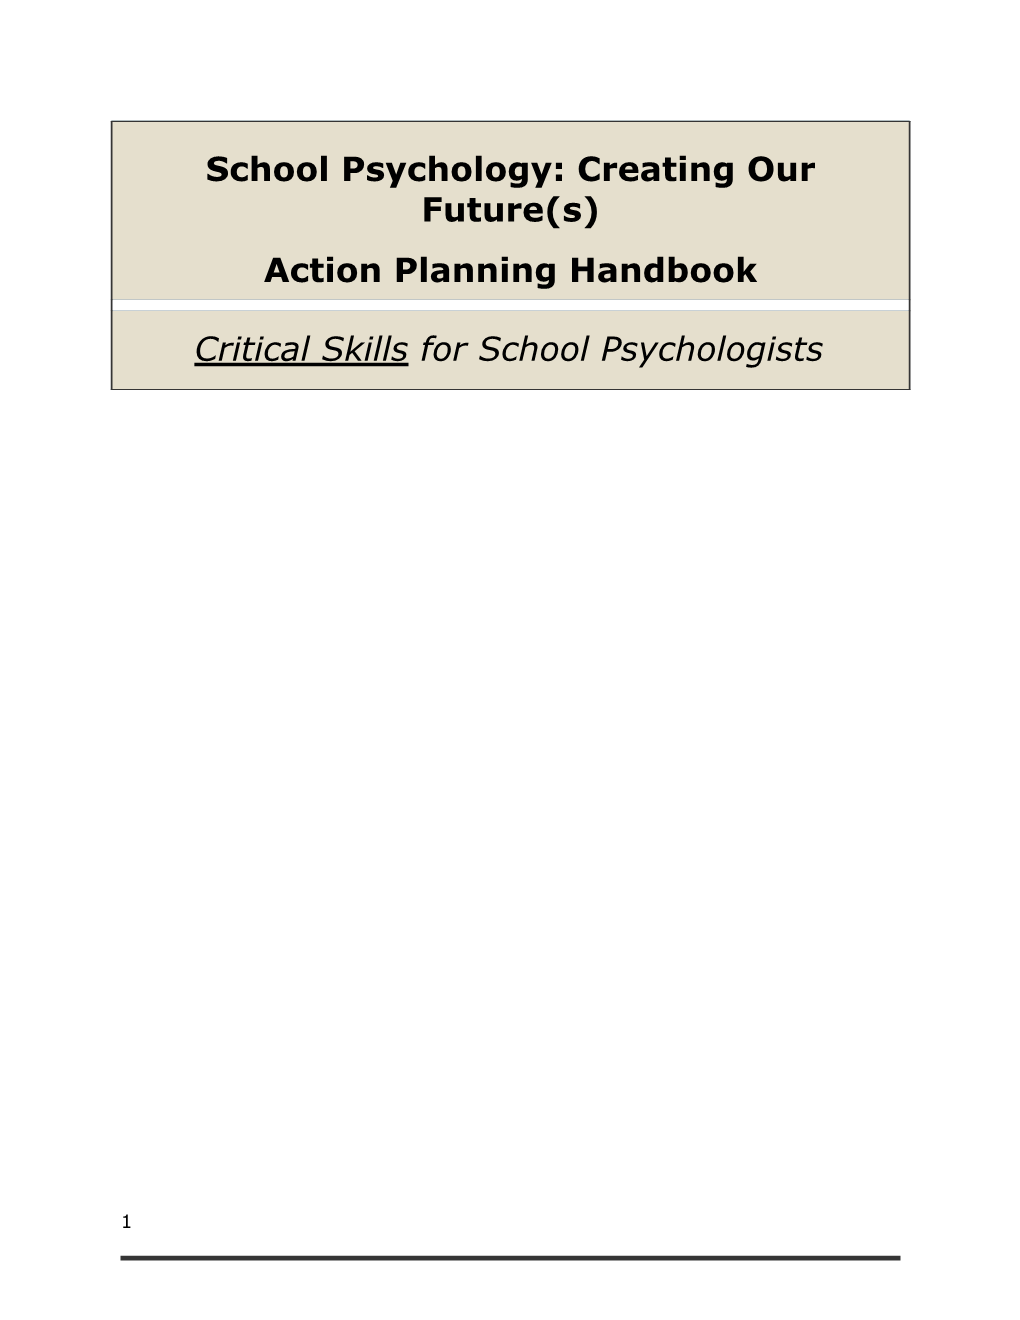 Critical Skills for School Psychologists